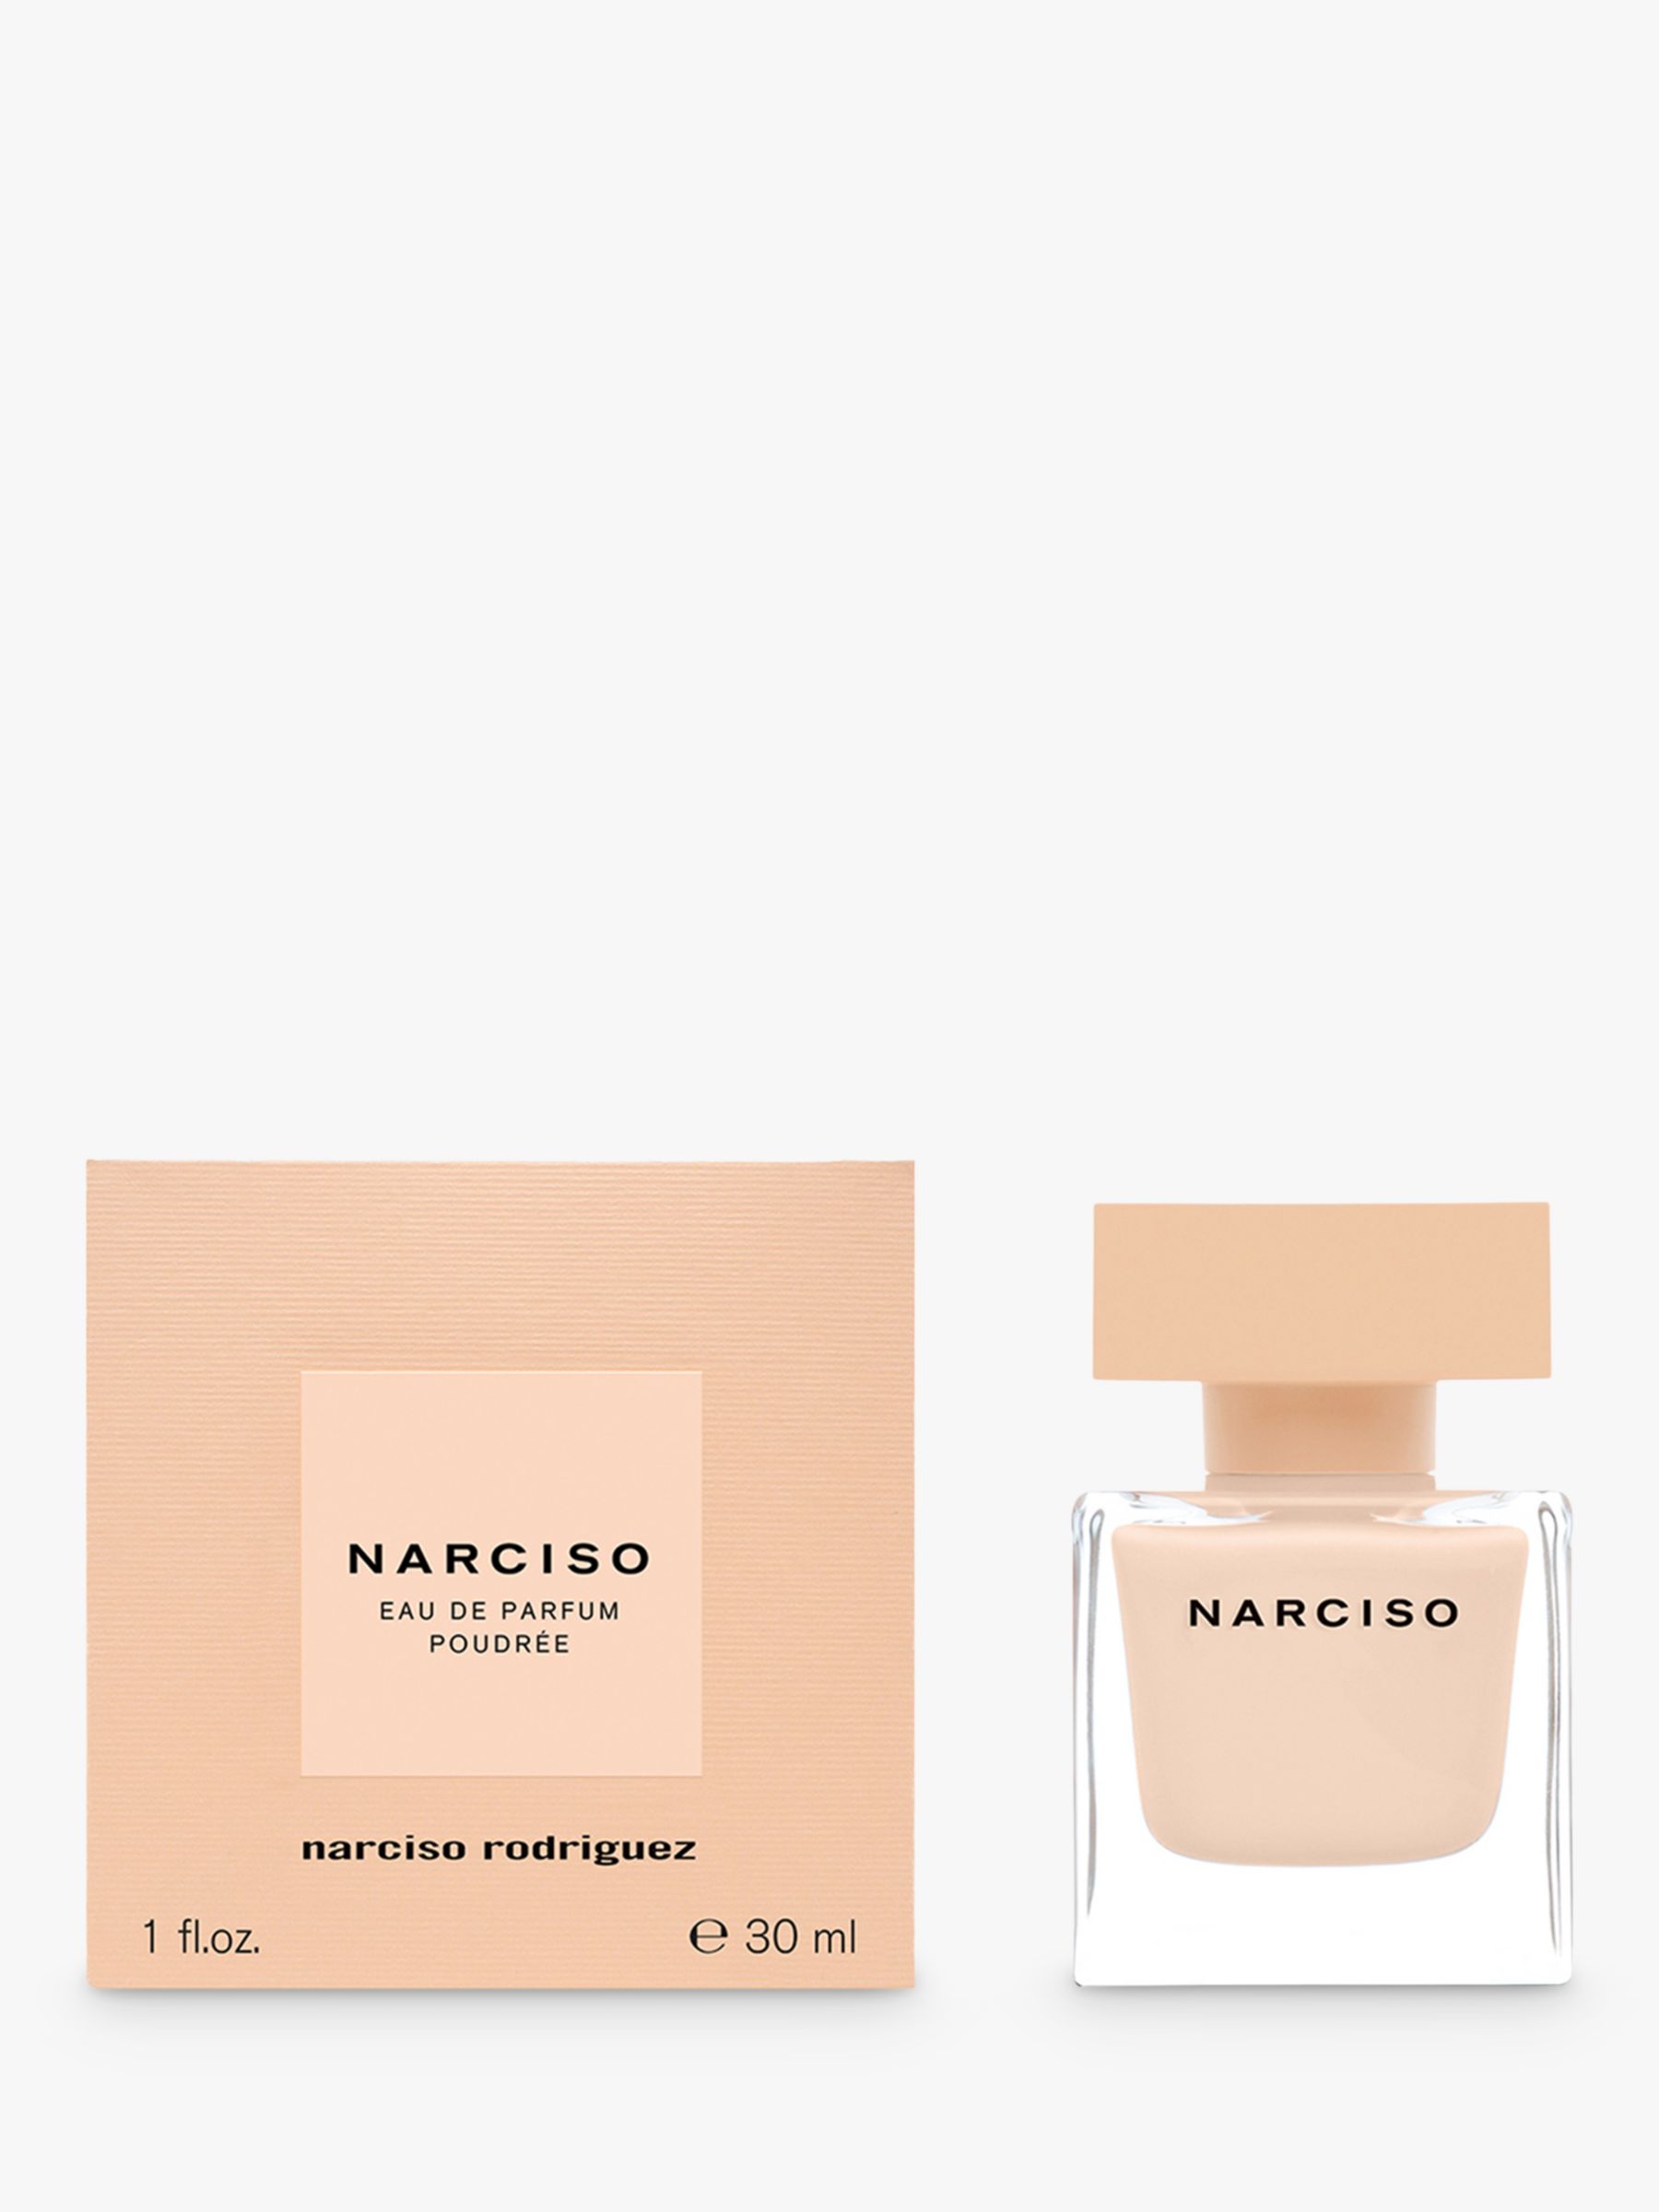 Dubbelzinnigheid Aanpassingsvermogen Of anders Narciso Rodriguez NARCISO Poudrée Eau de Parfum